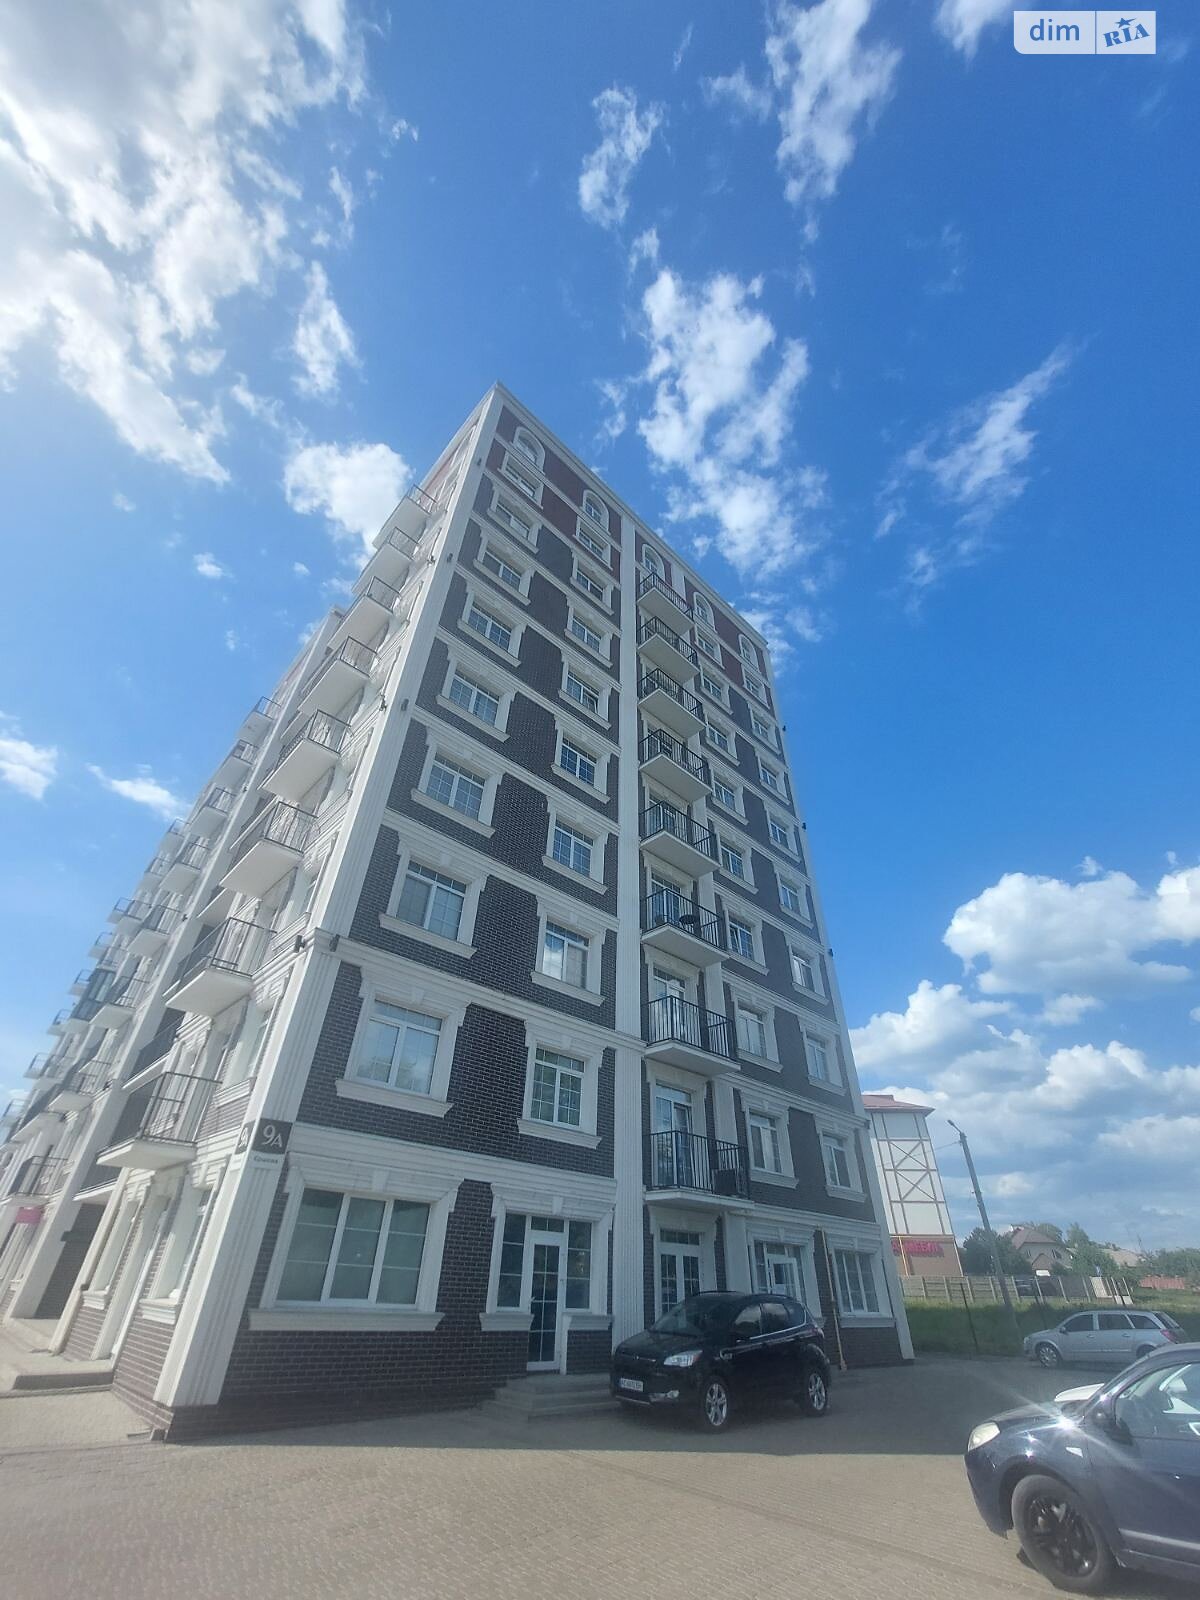 Продажа двухкомнатной квартиры в Луцке, на ул. Ершова 9А, район 33 микрорайон фото 1